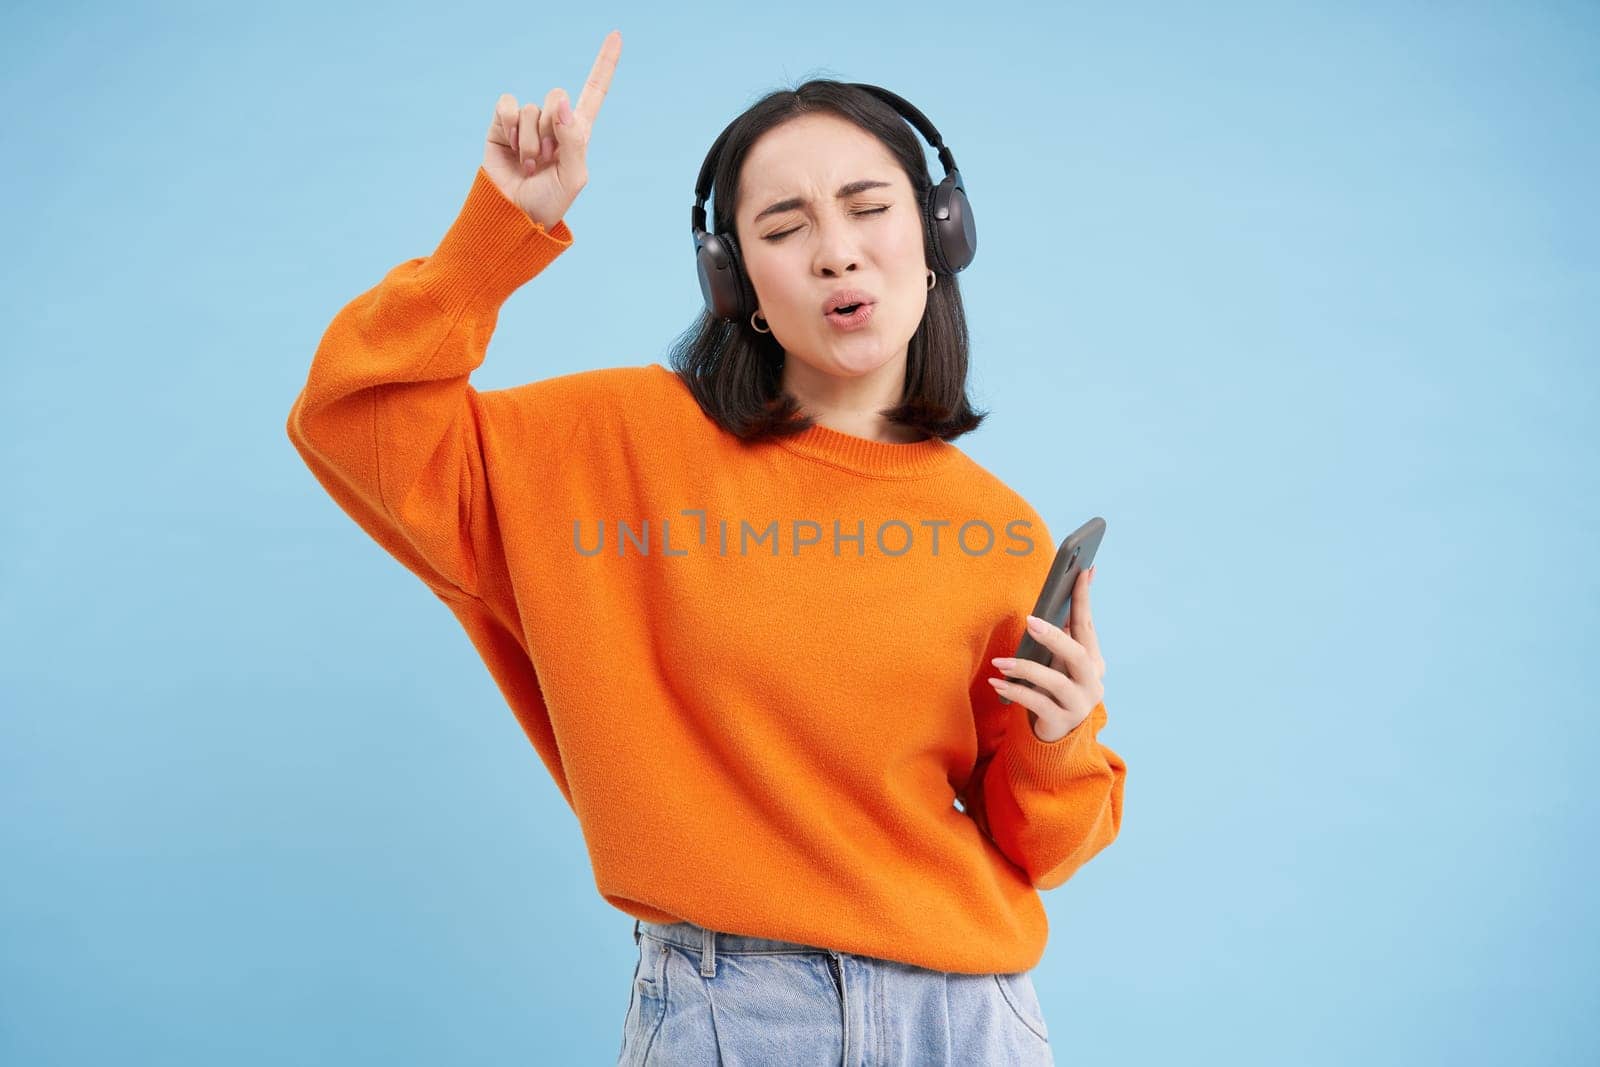 Beautiful korean woman in headphones, dancing, listening music on mobile phone app, smiling, posing over blue background.